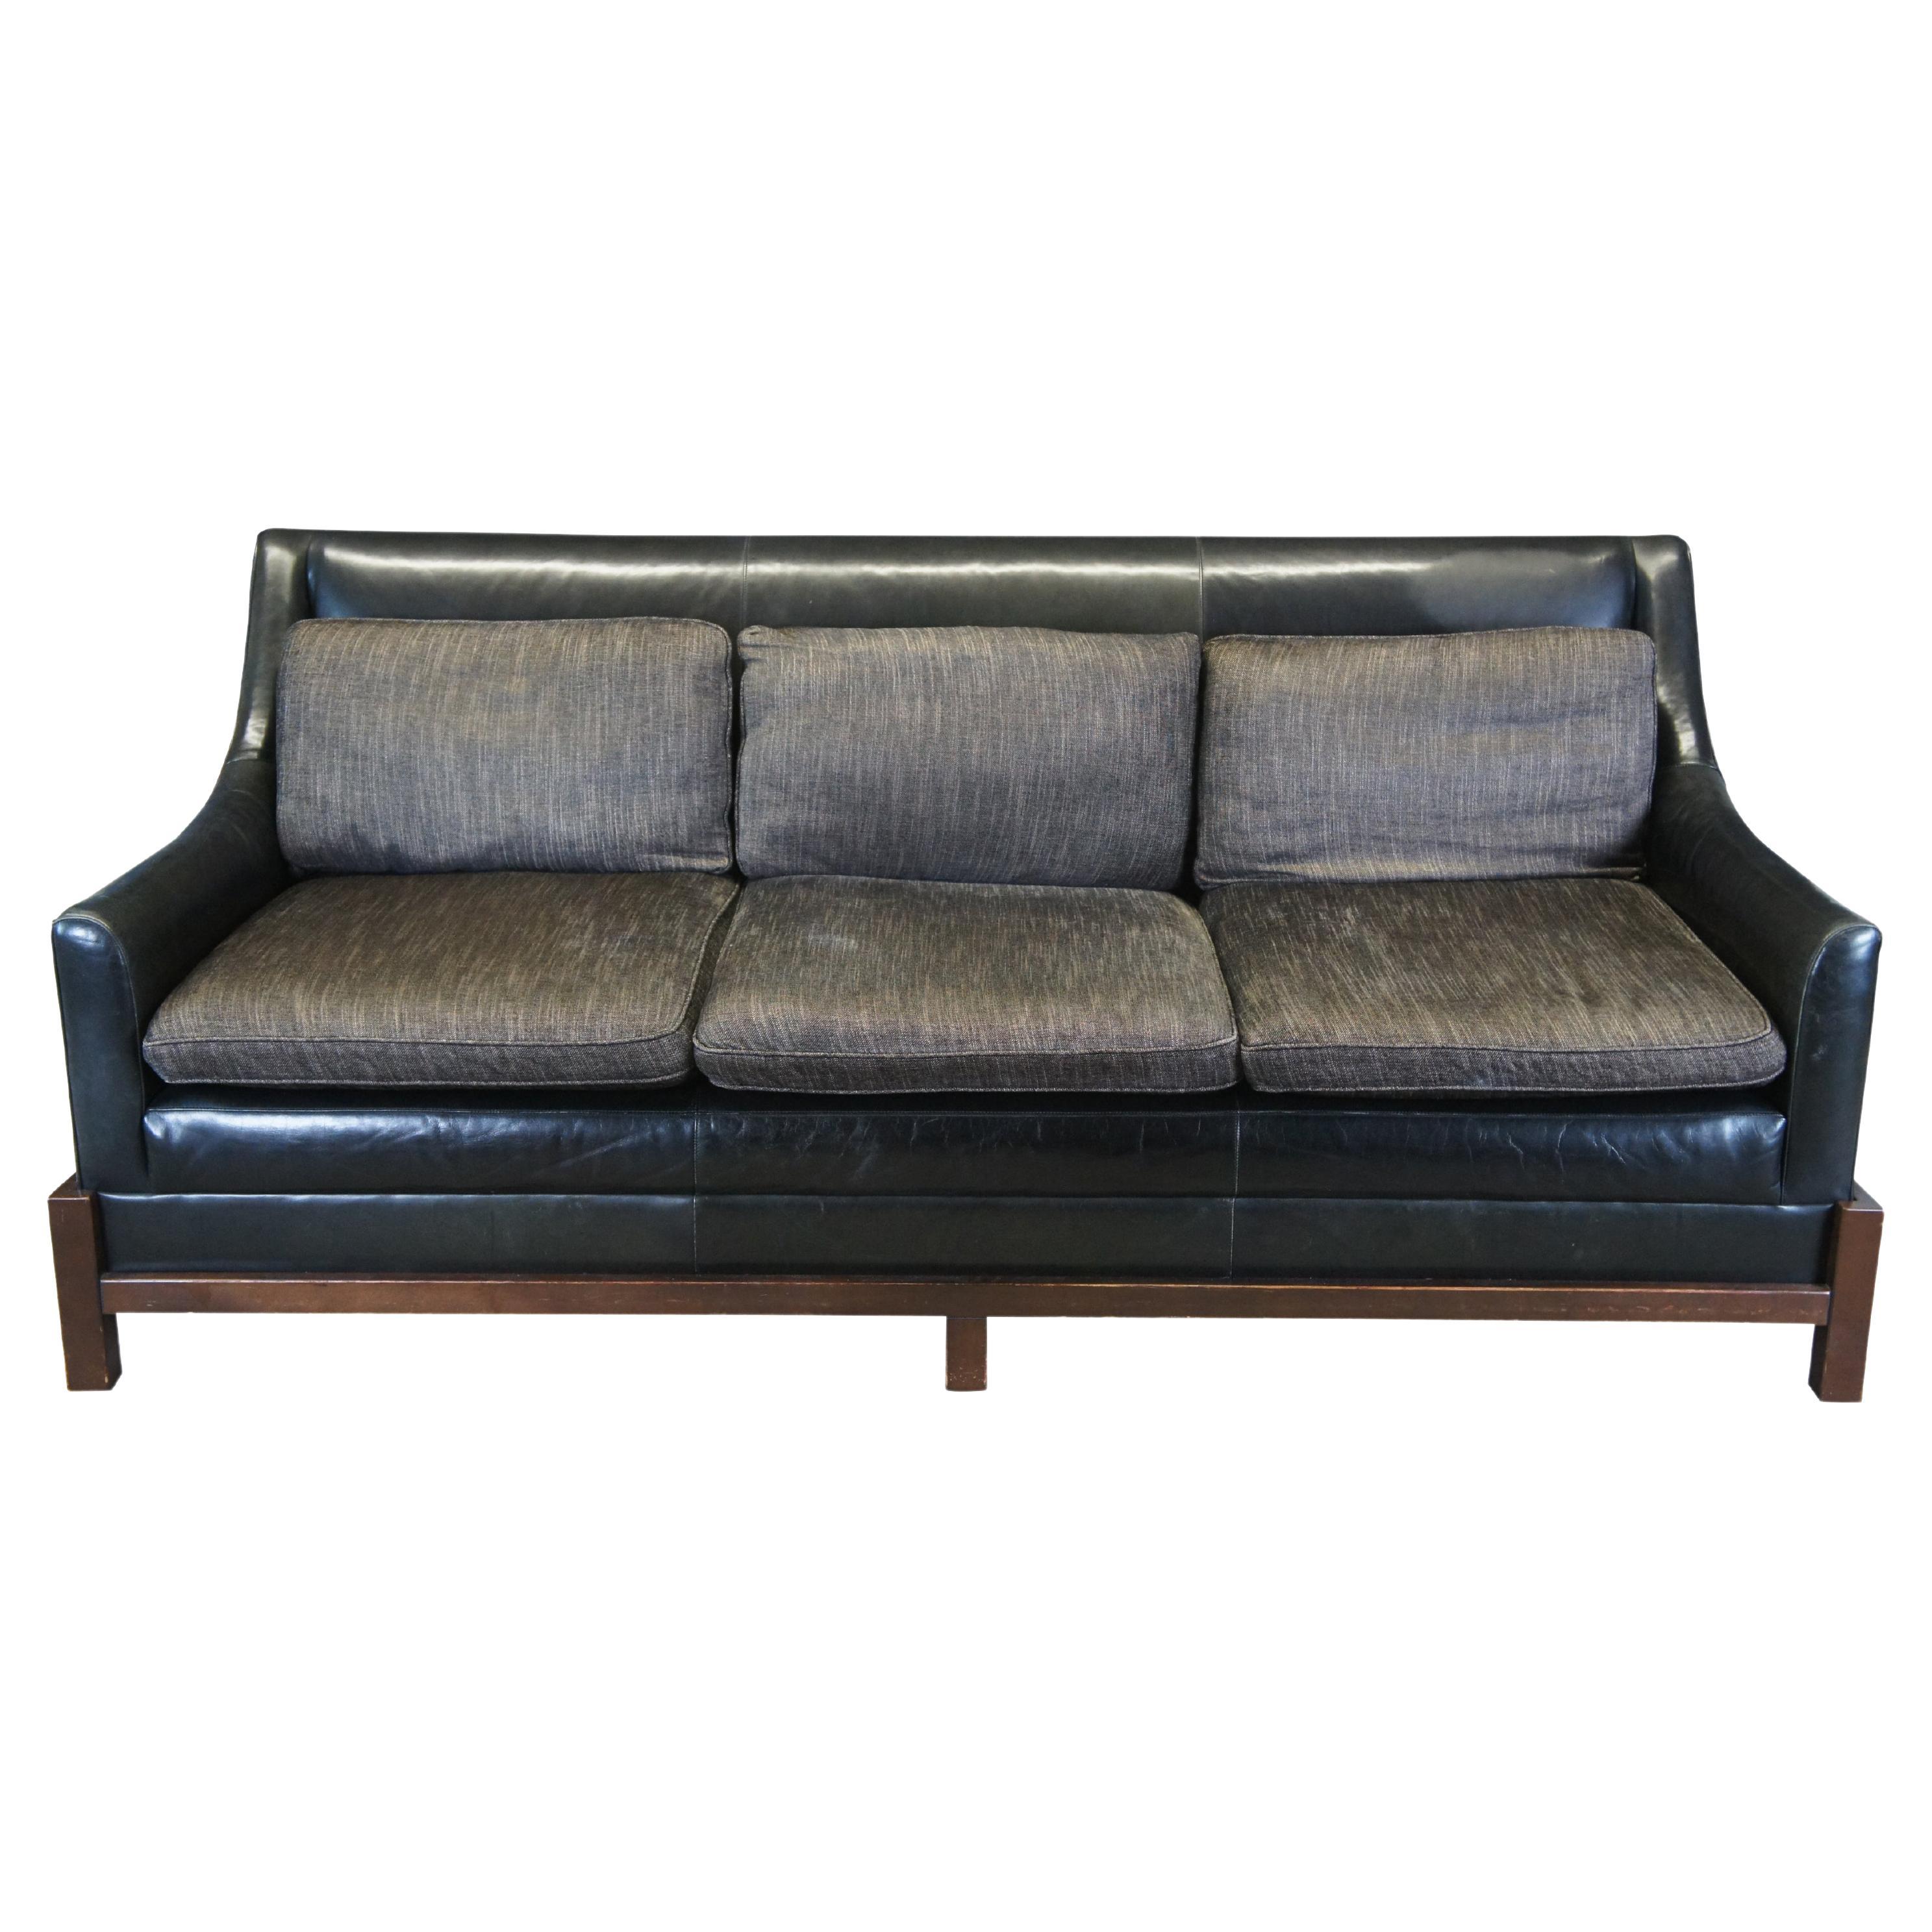 Vintage Baker Furniture Laura Kirar Modern Leather Black 3 Seater Neue Sofa 85"